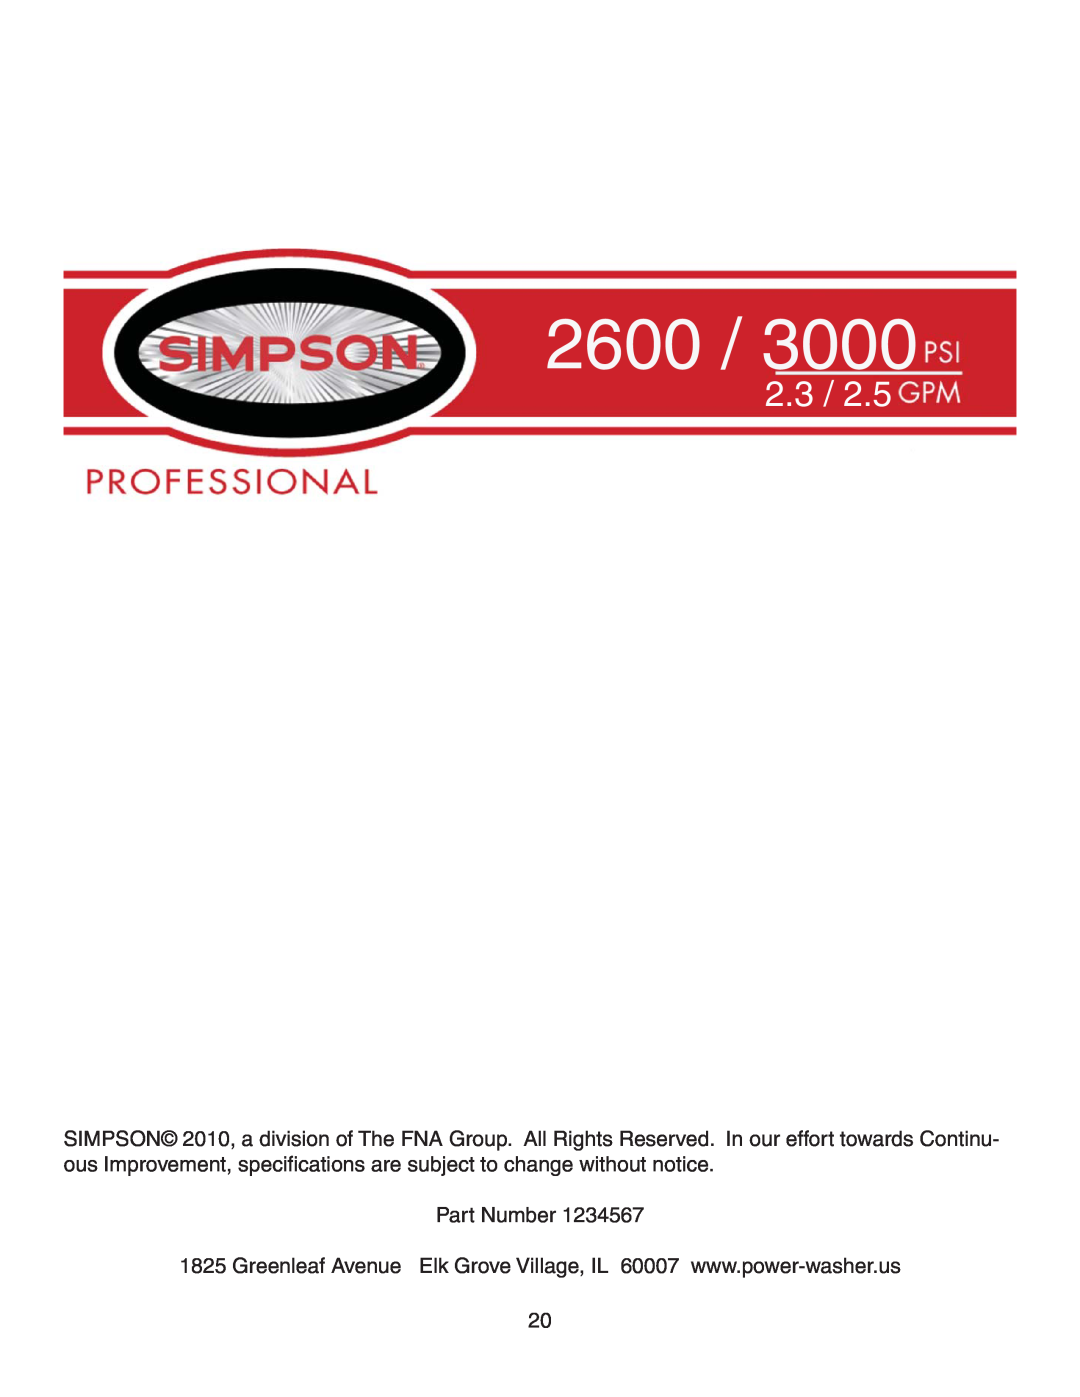 Simpson MSV3000, MSV2600 warranty 2.3, Part Number 